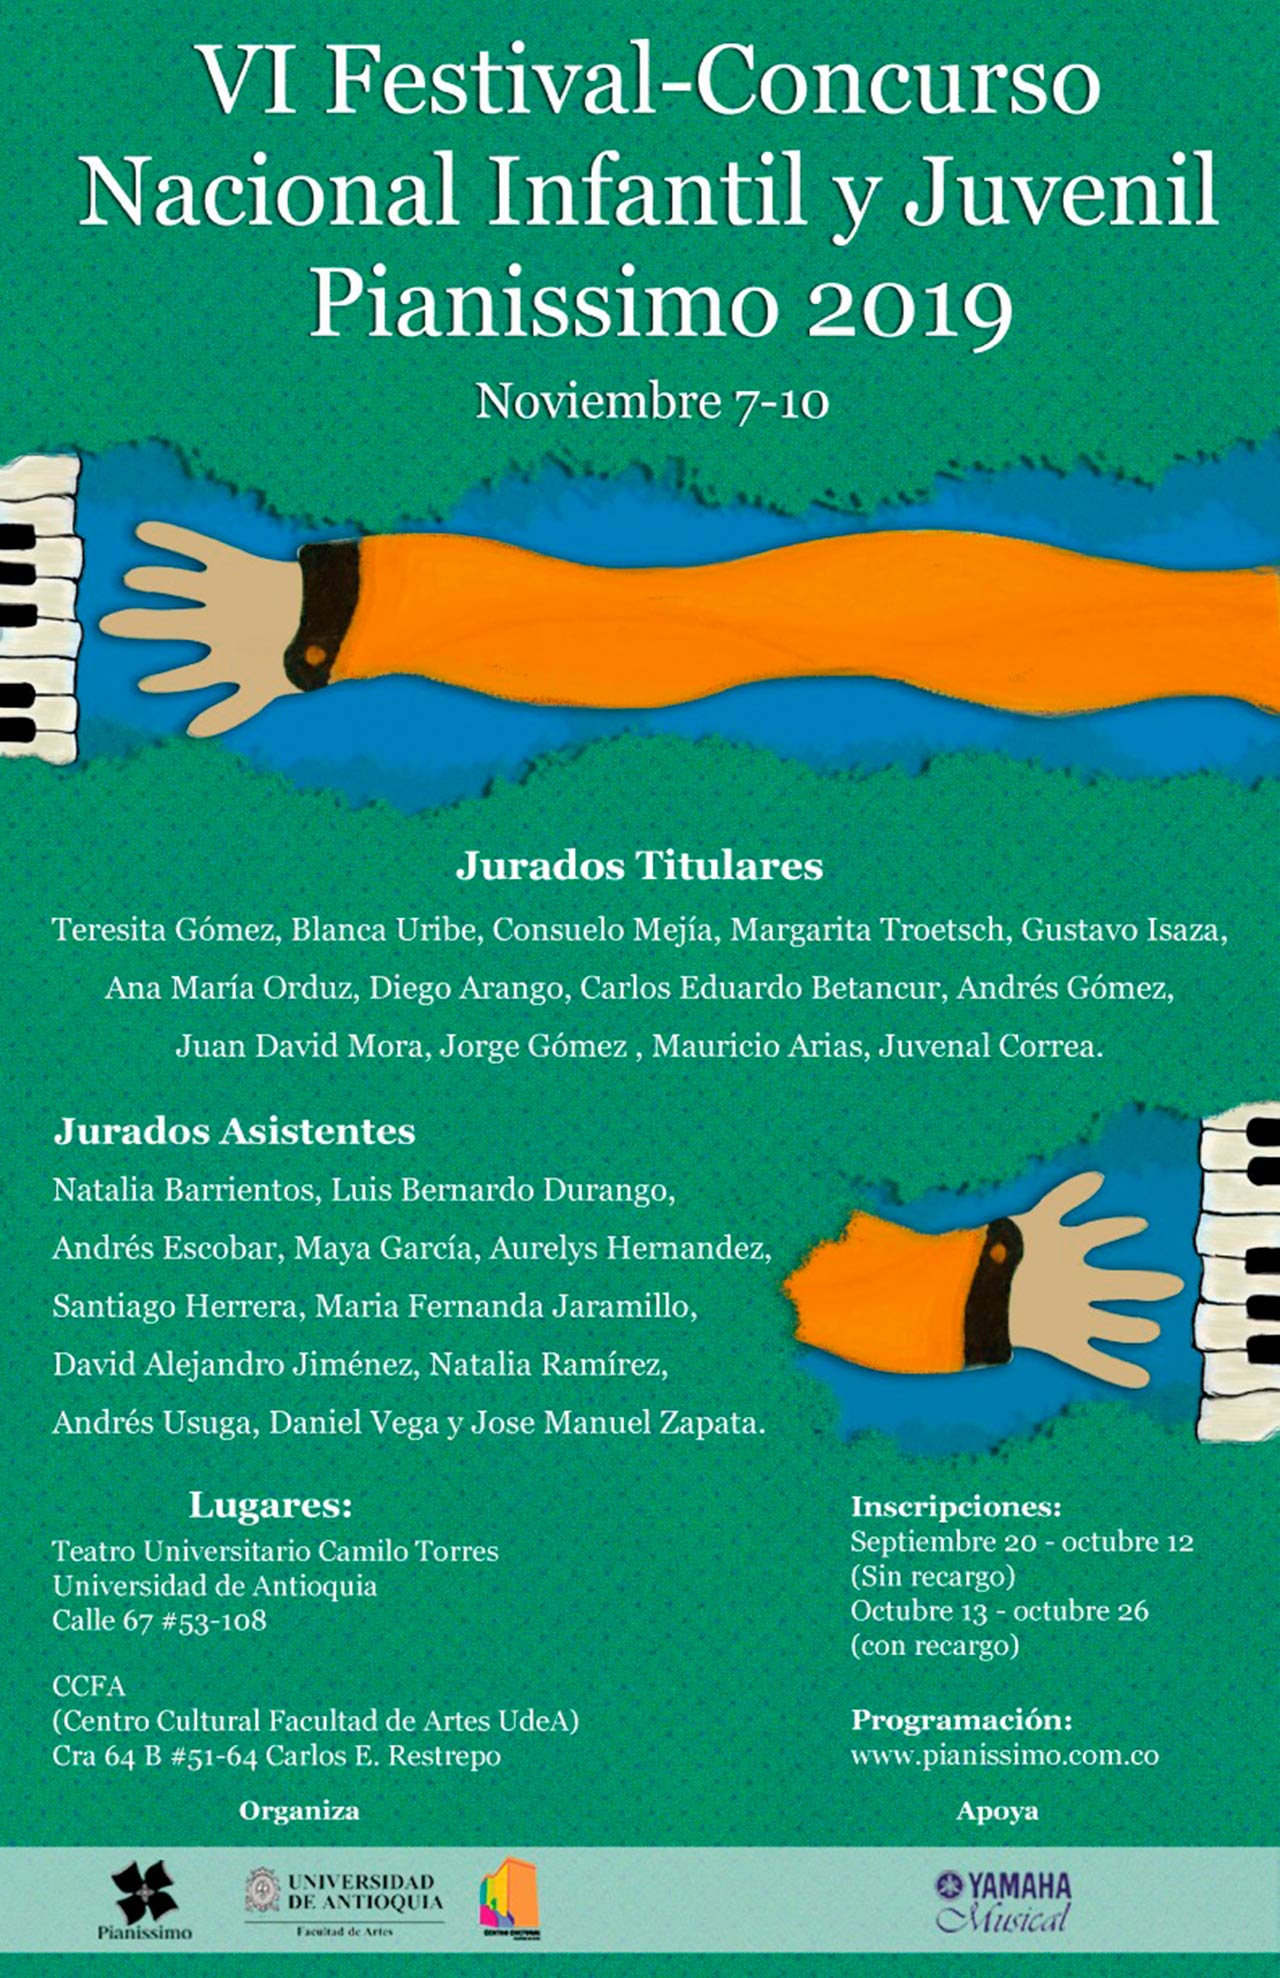 VI Festival-Concurso Nacional Infantil y Juvenil Pianissimo 2019